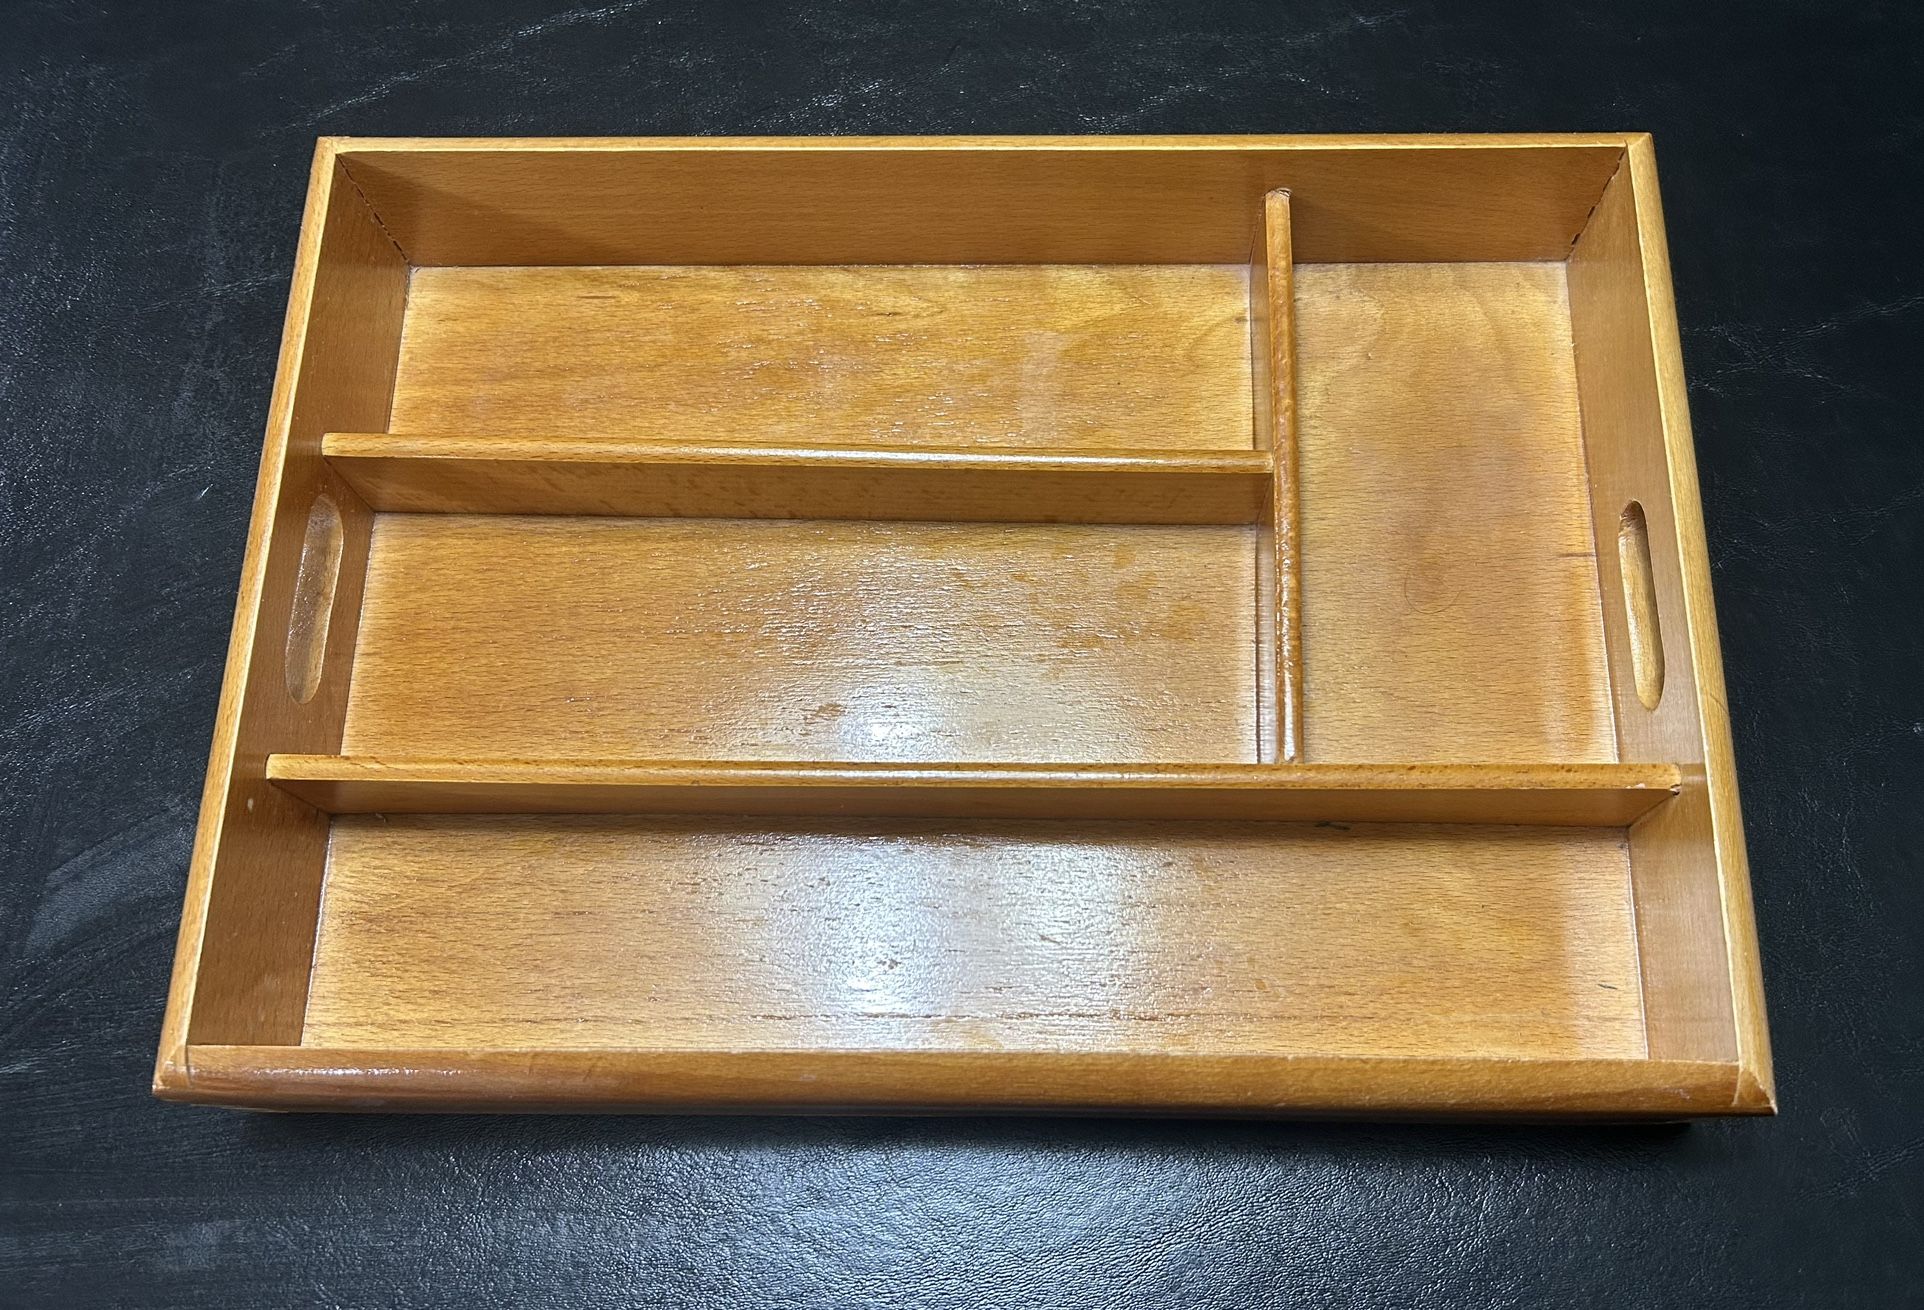 Wooden organizing tray